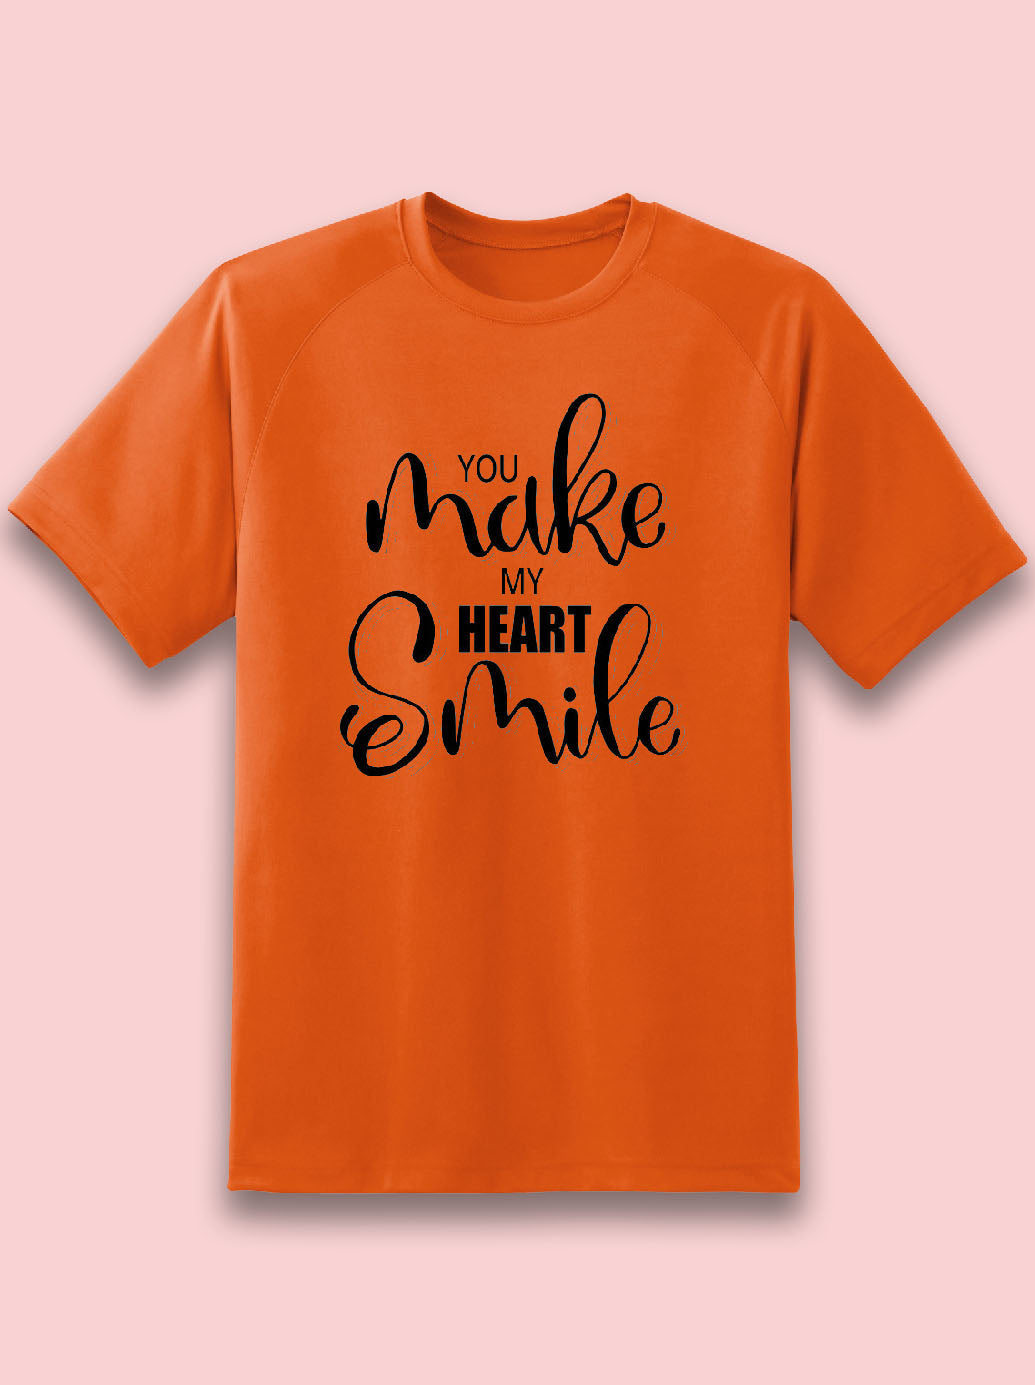 Women Orange Printed Cotton Tshirt